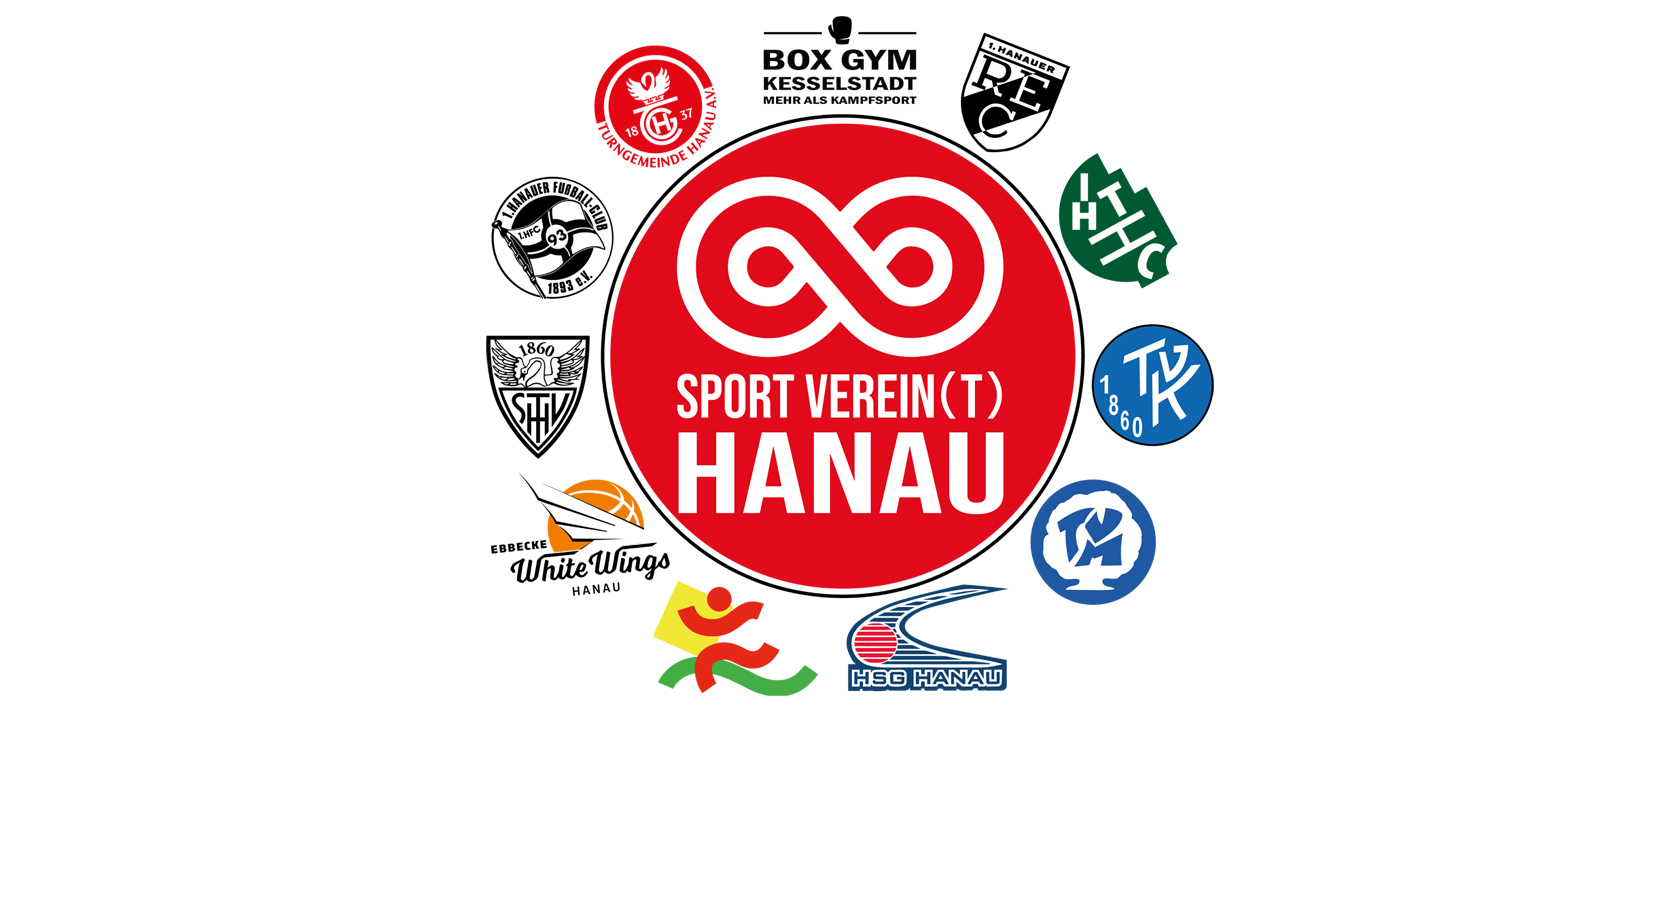 Sport verein(t) Hanau